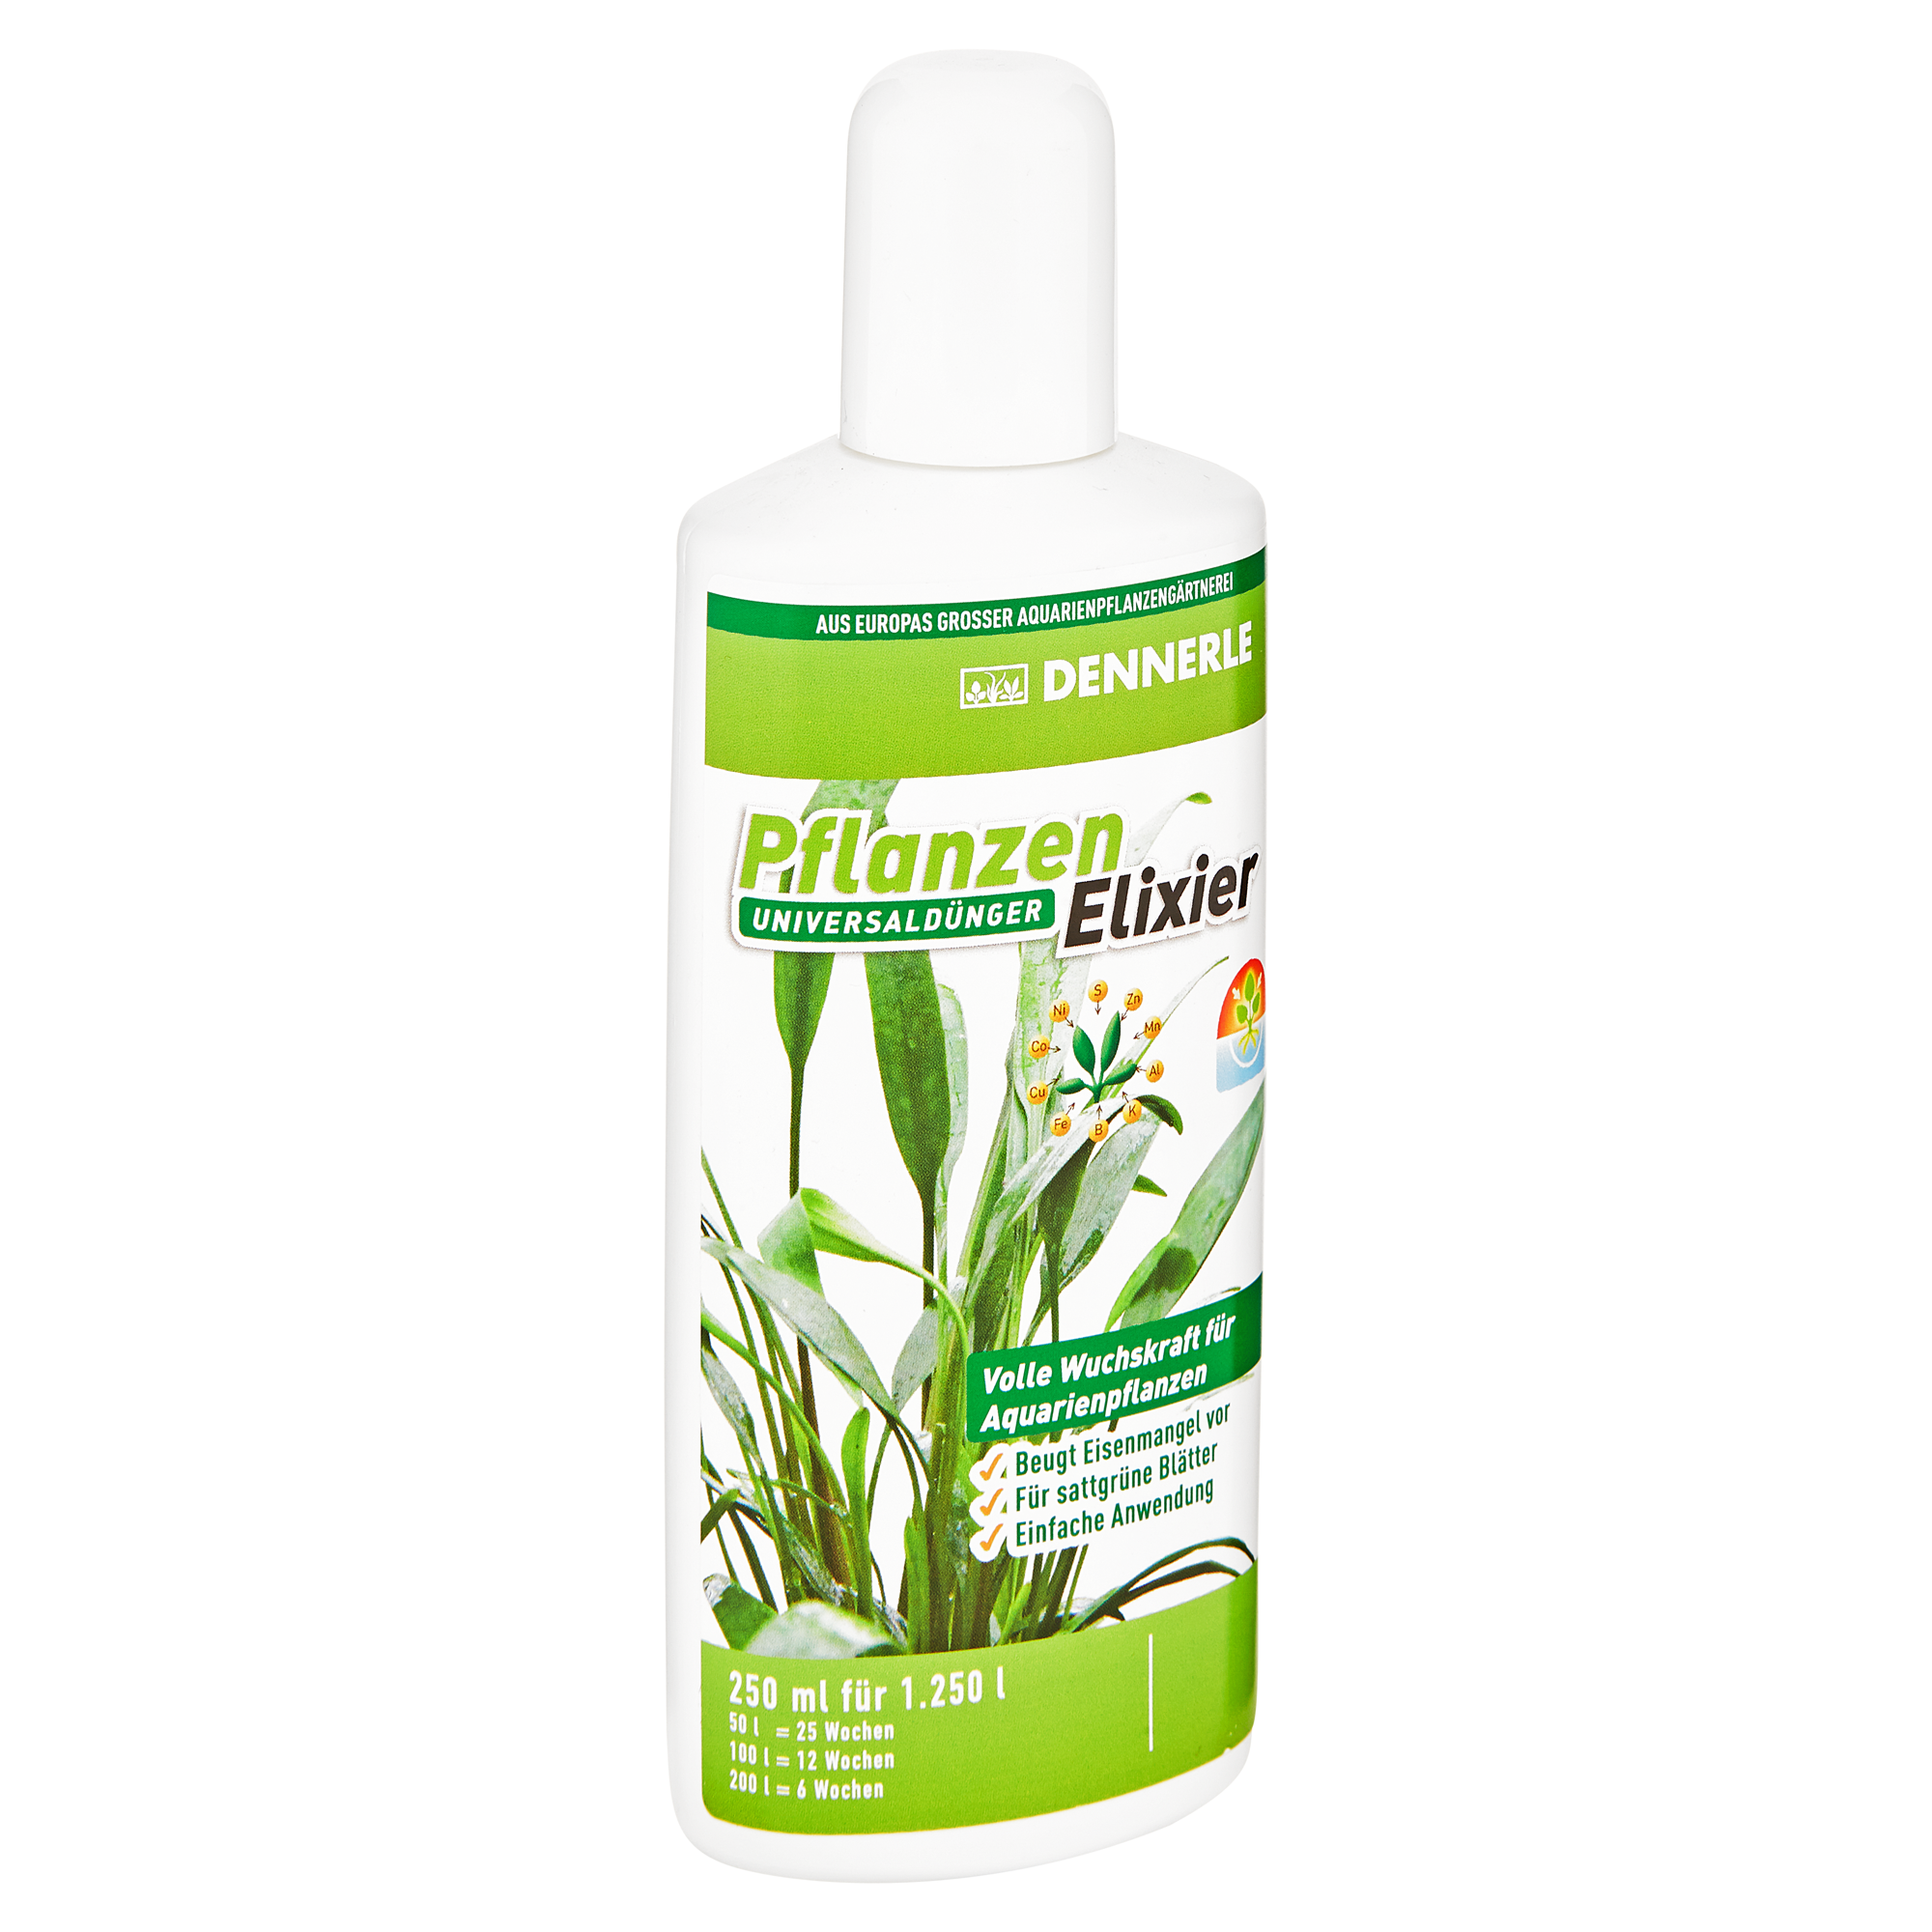 Universaldünger "PflanzenElixier" 250 ml + product picture